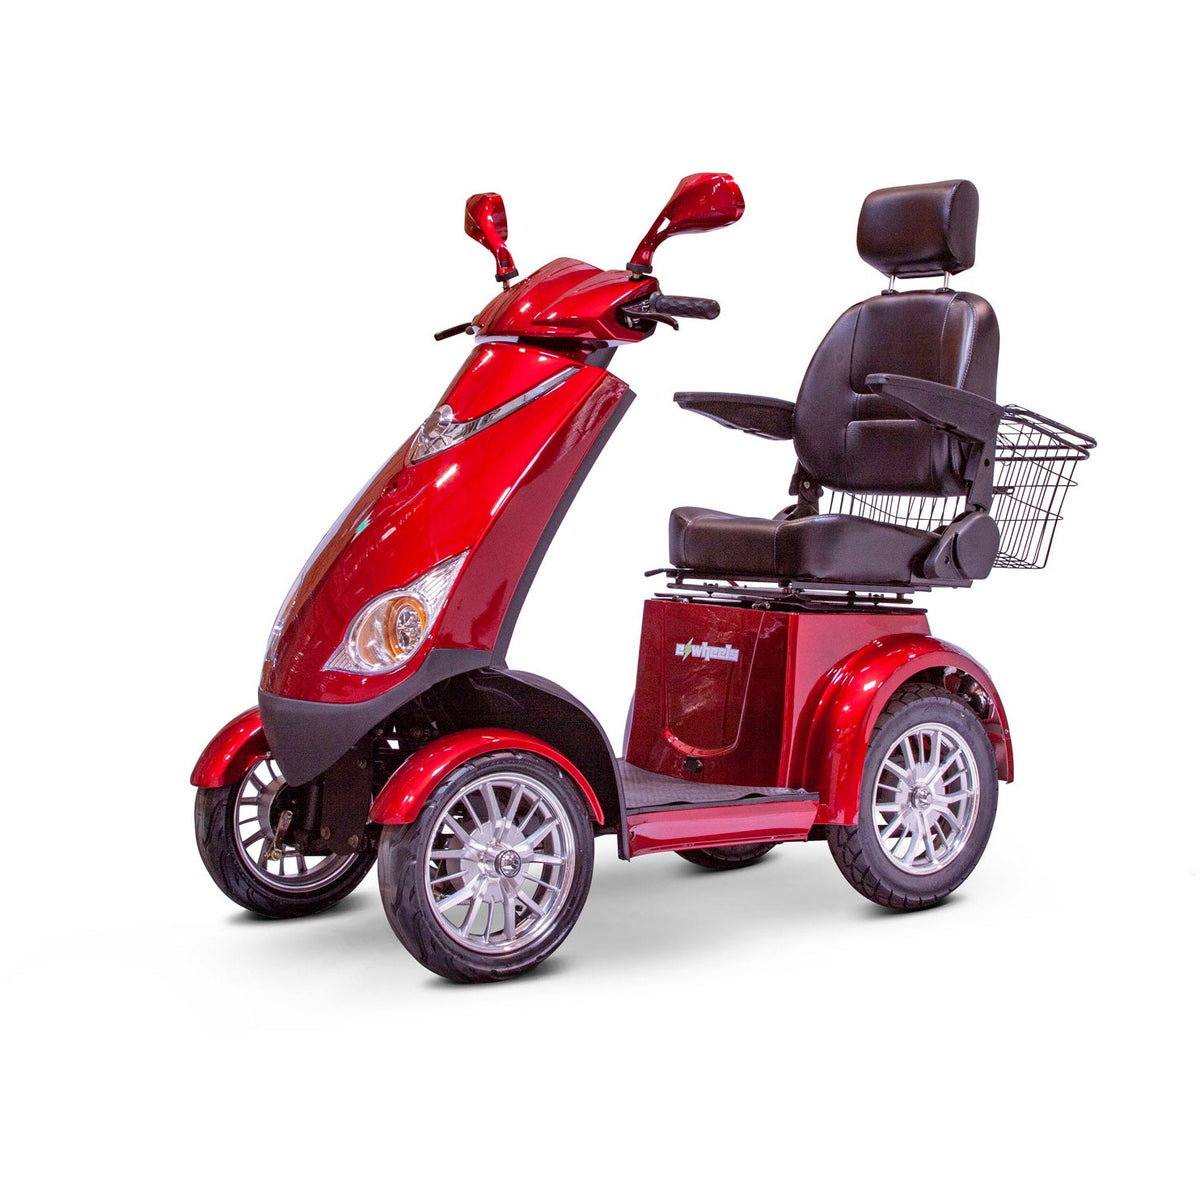 EWheels - EW 72 Mobility Scooter